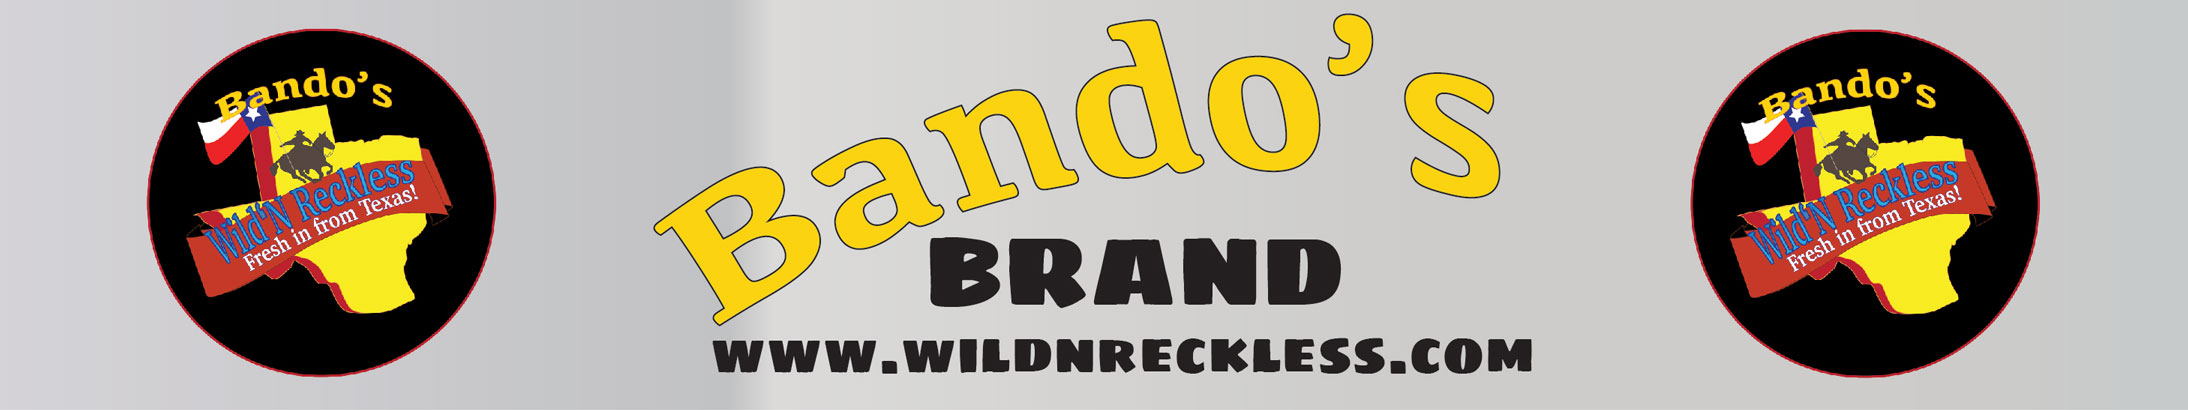 Bandos Brand / Wild N Reckless / Salsa / Pepper Sauce / Mike Bandy